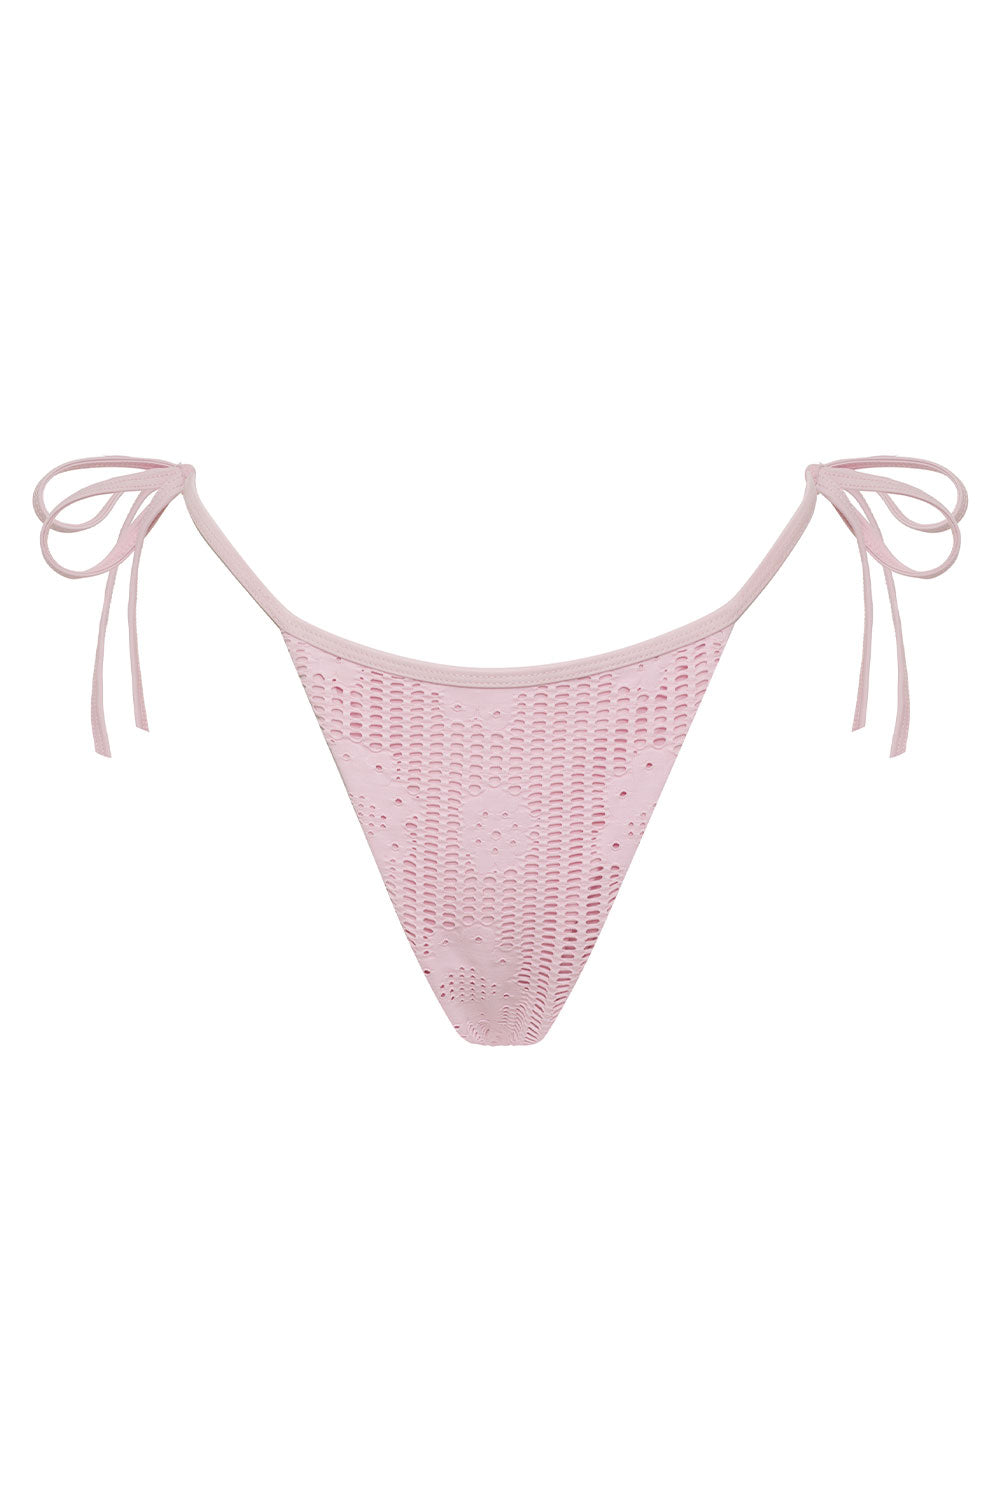 x PAMELA ANDERSON Venice Cheeky Bikini Bottom - Pink Dream